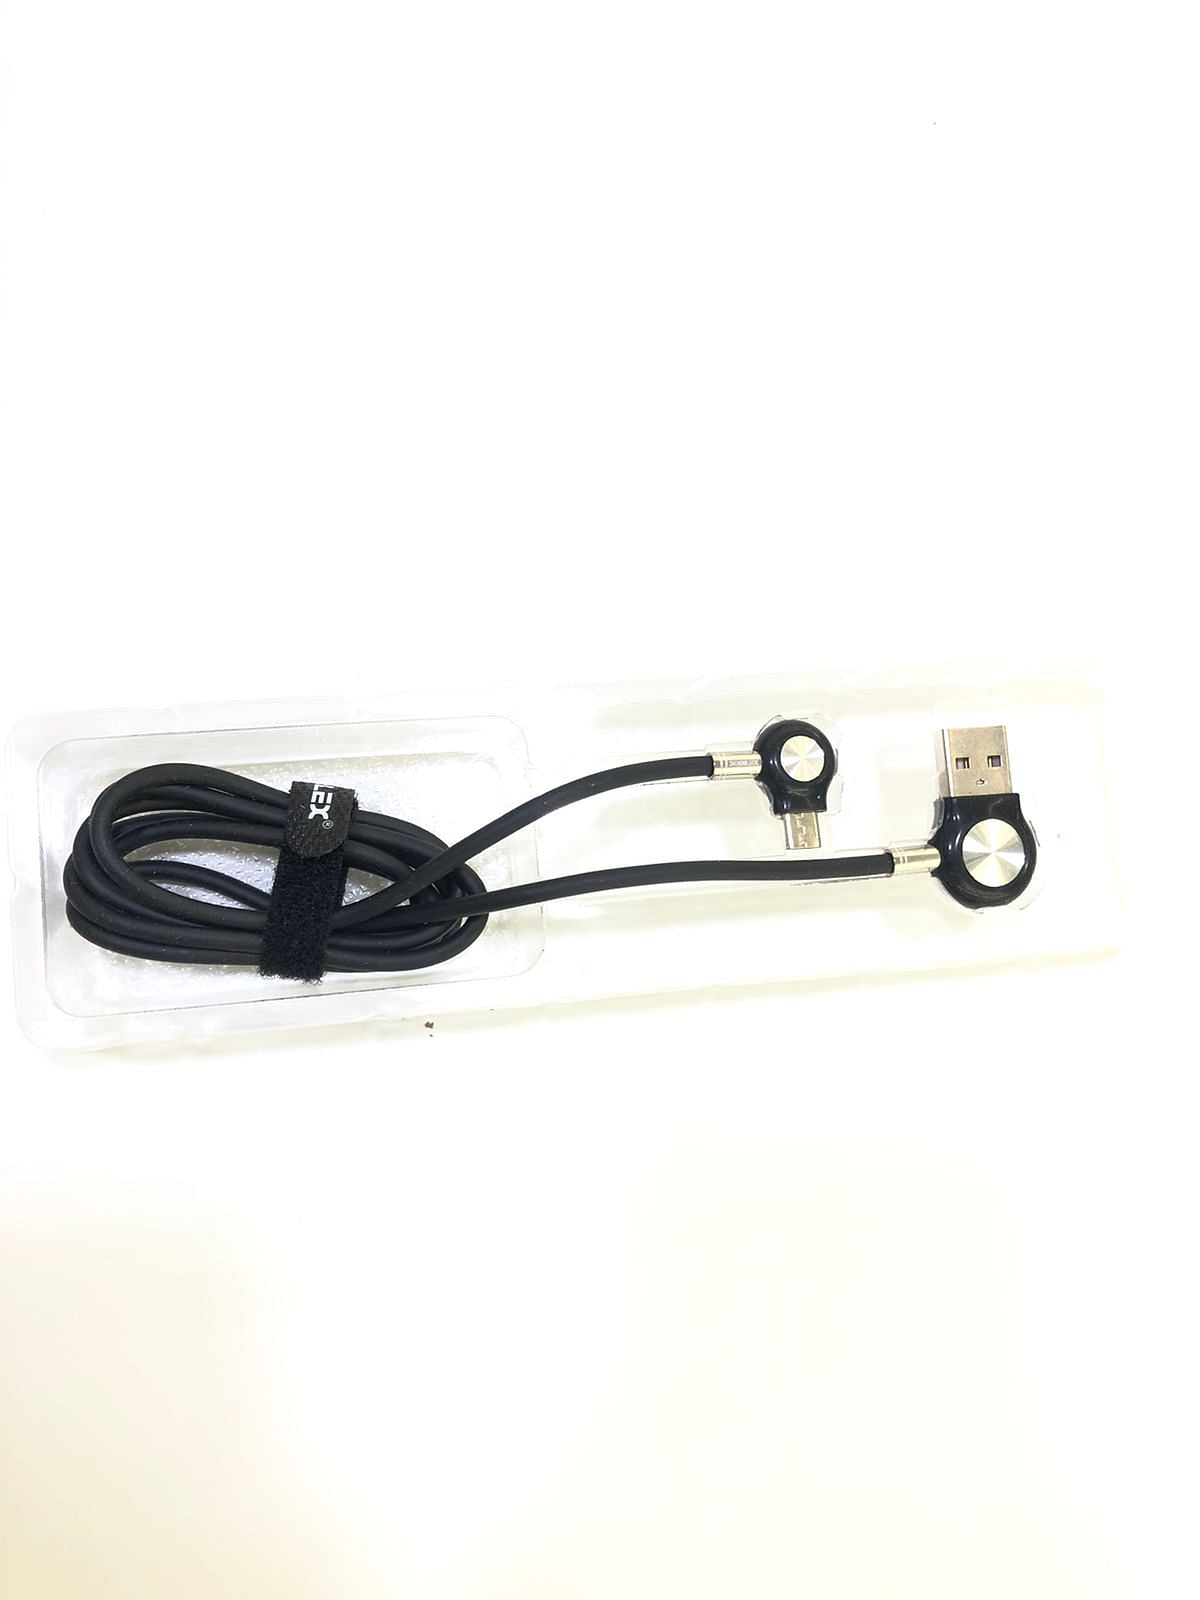 SONILEX USB data charging cable SL-CDC188